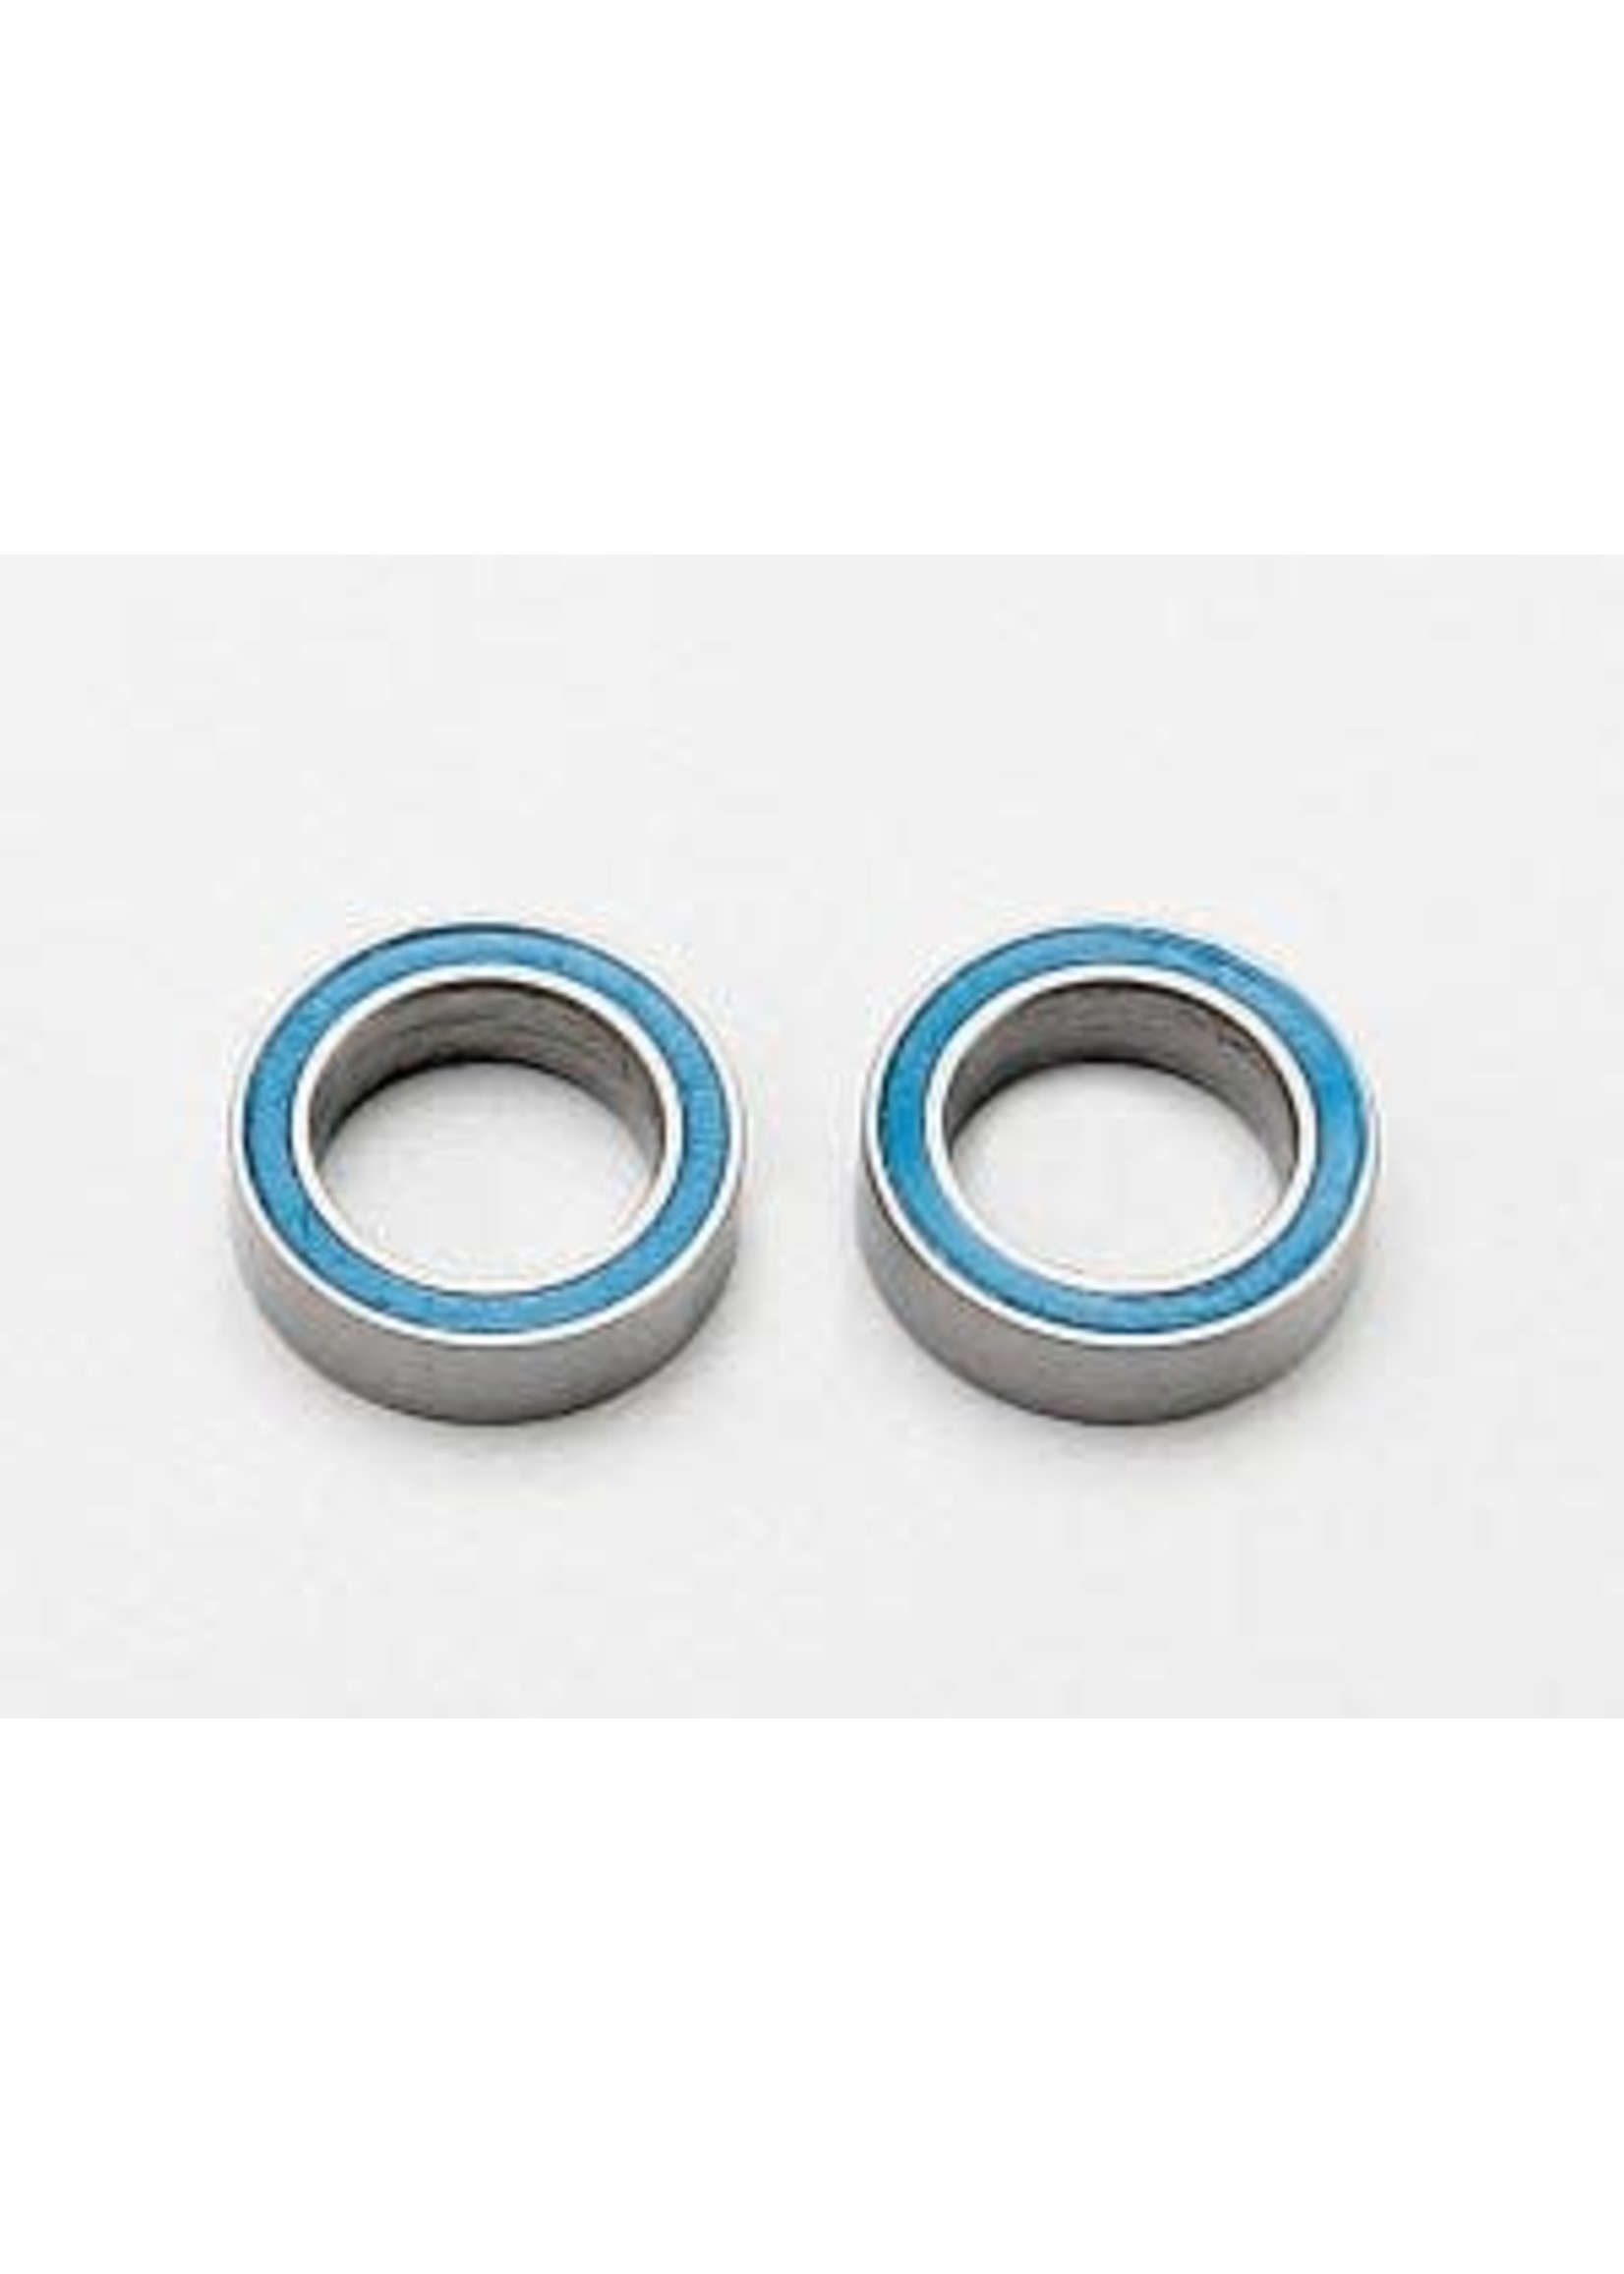 Traxxas 7020 Ball bearings, blue rubber sealed (8x12x3.5mm) (2)